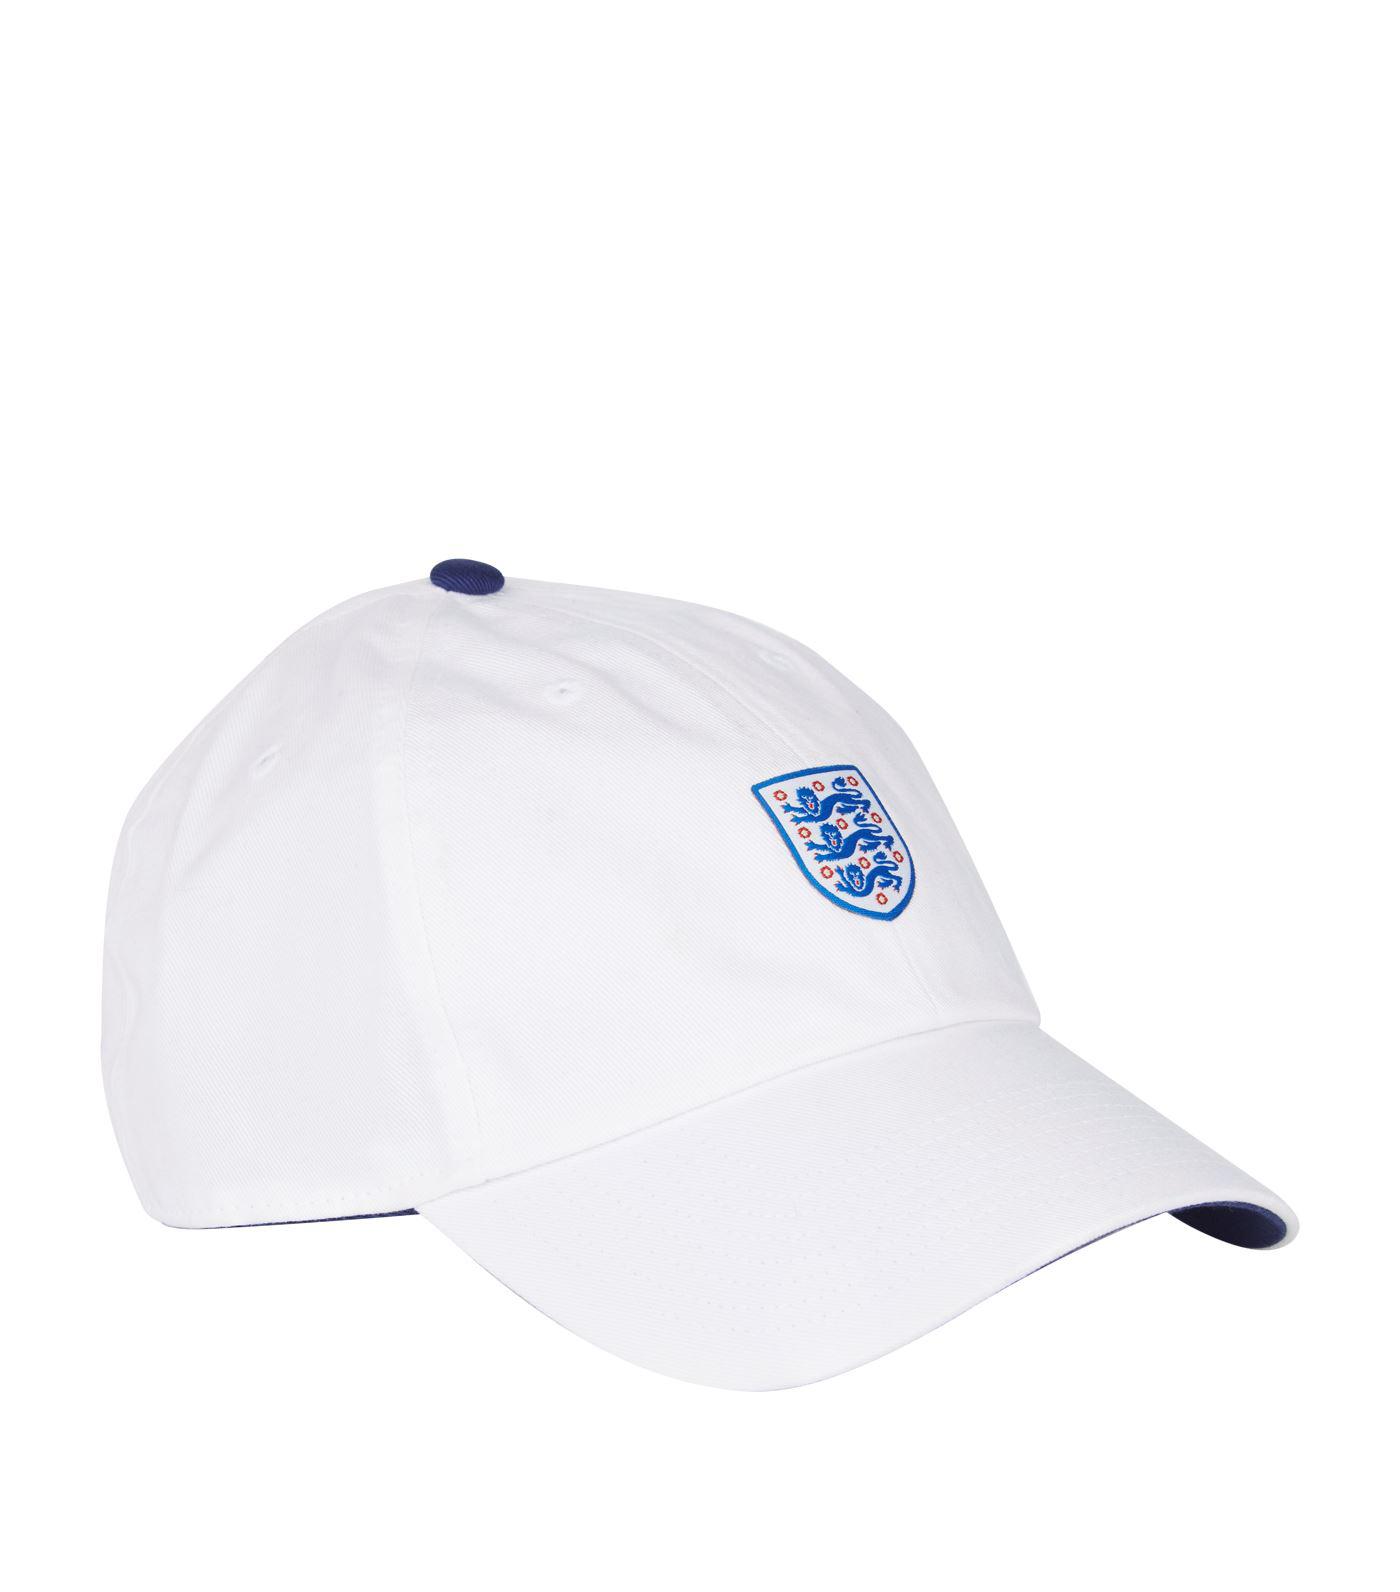 Nike England H86 Cap in White for Men - Lyst